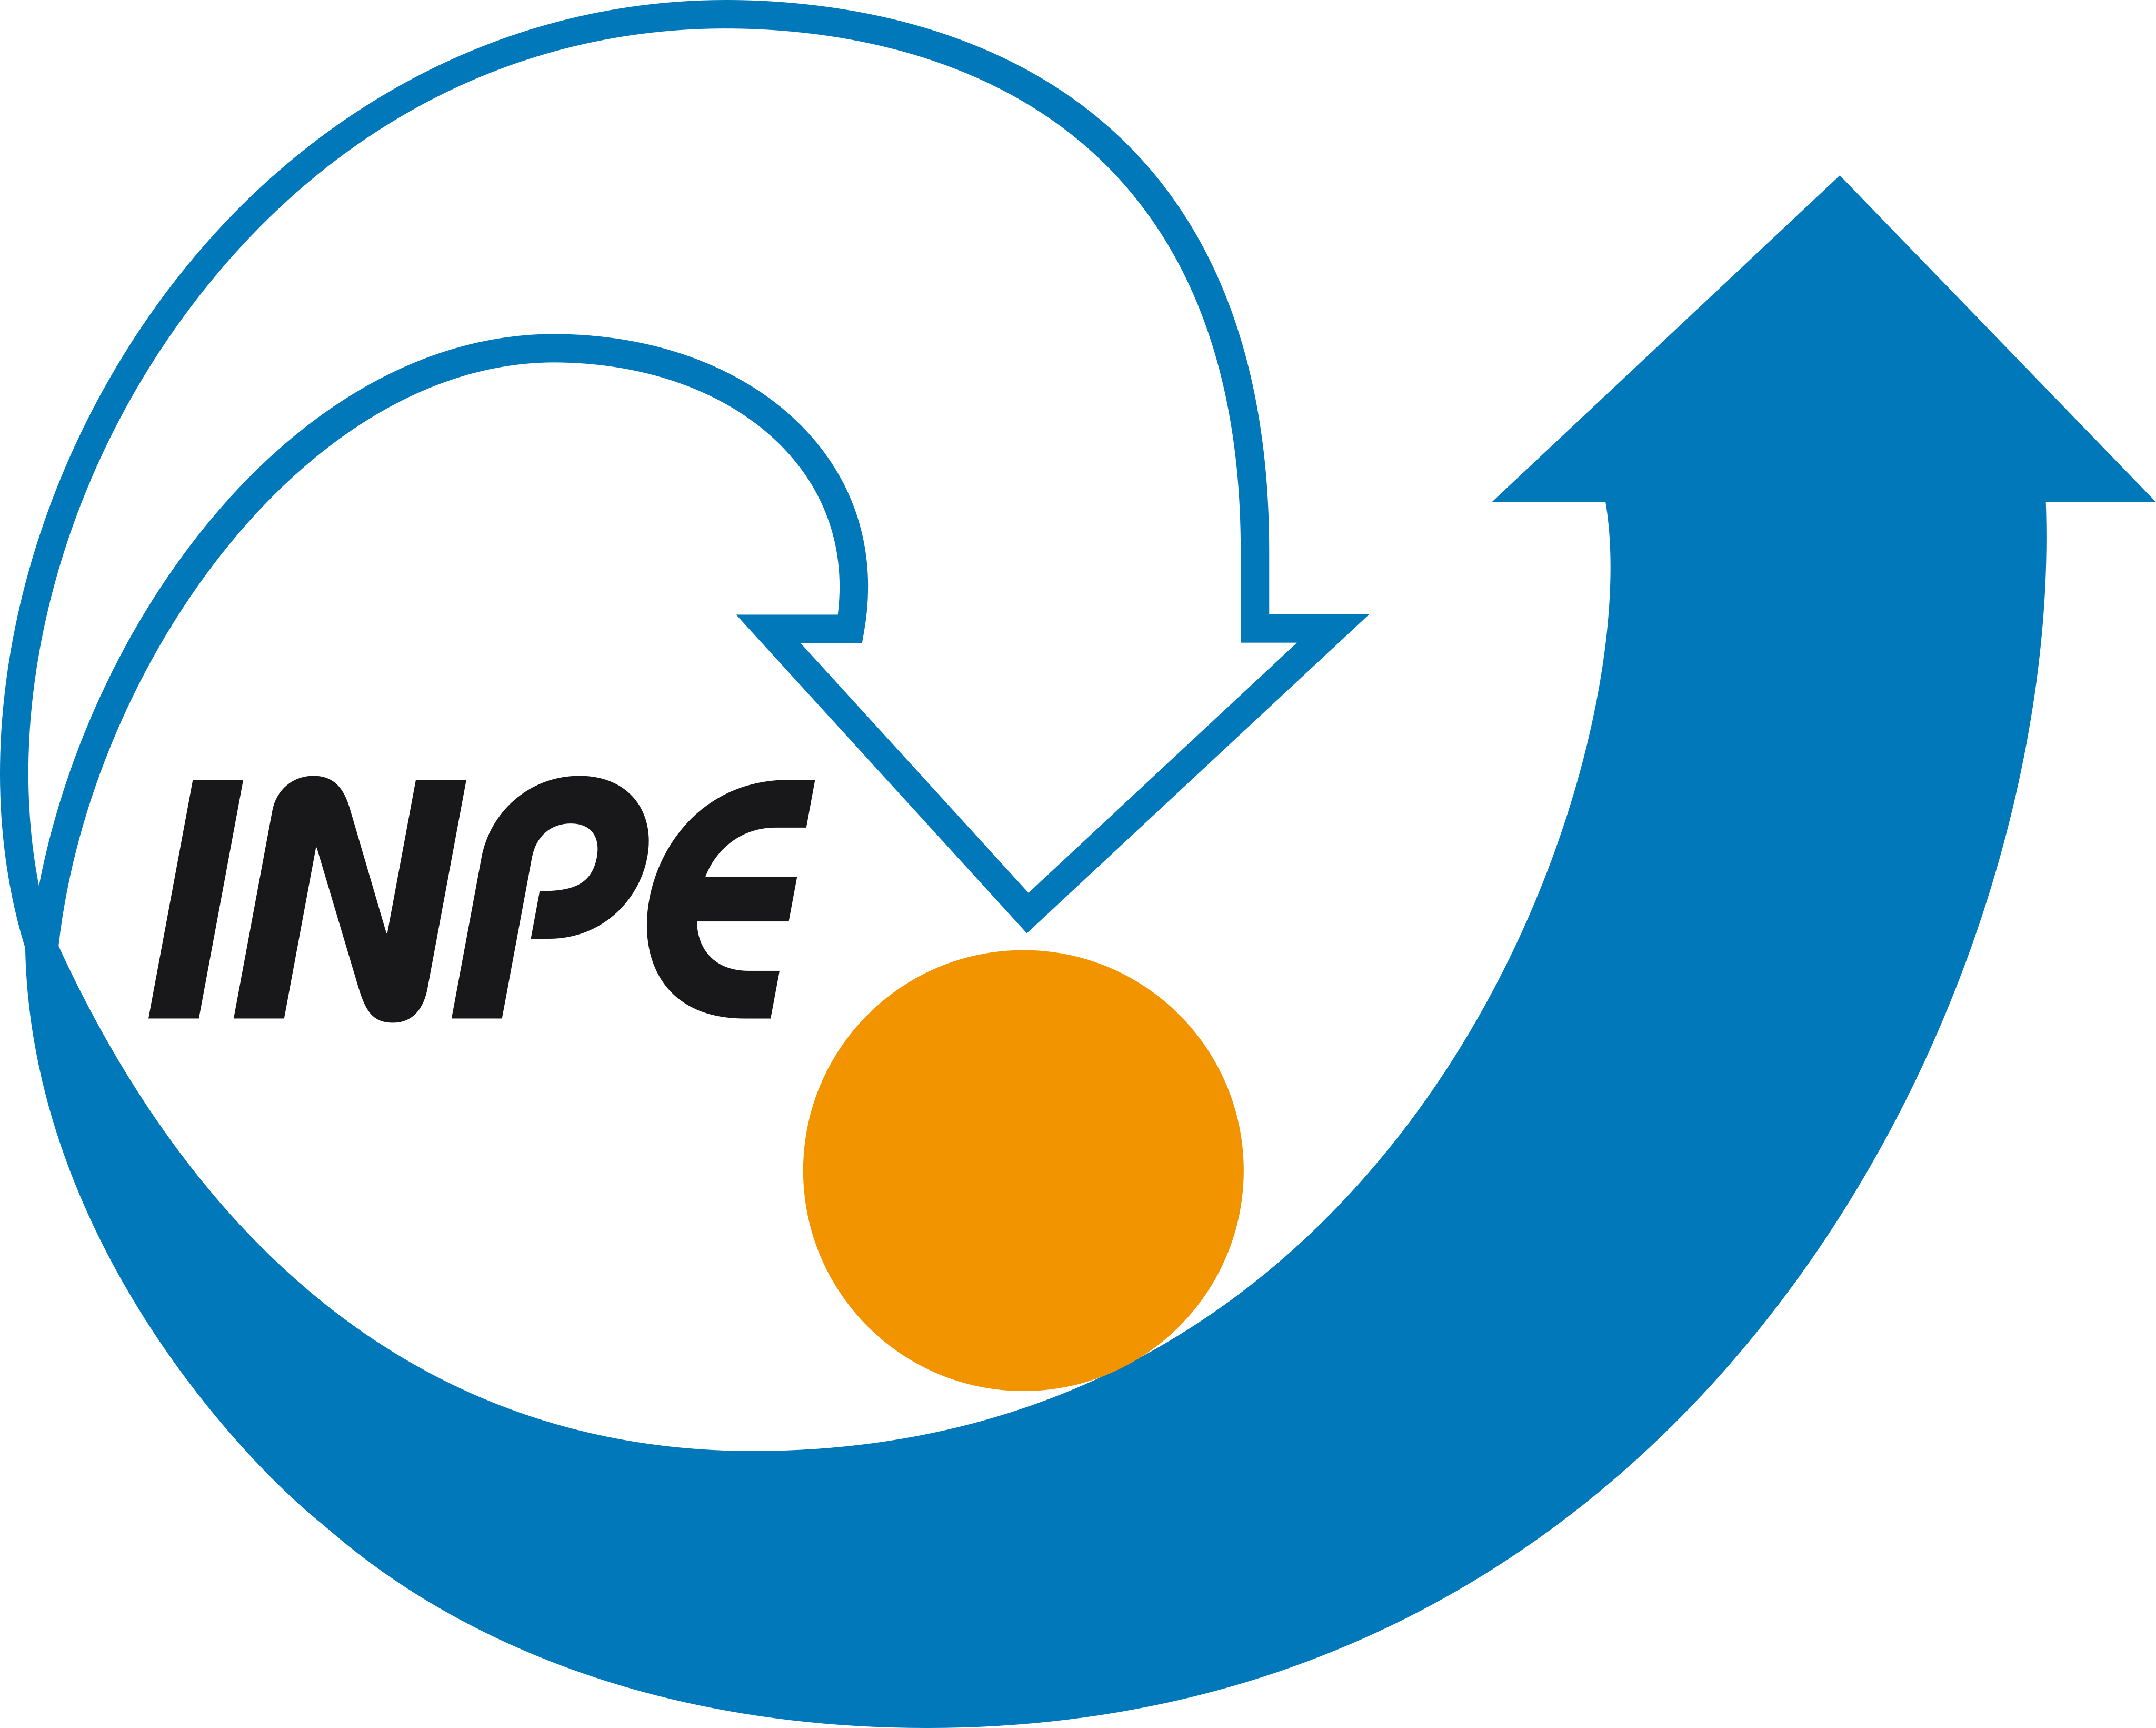 INPE Logo.